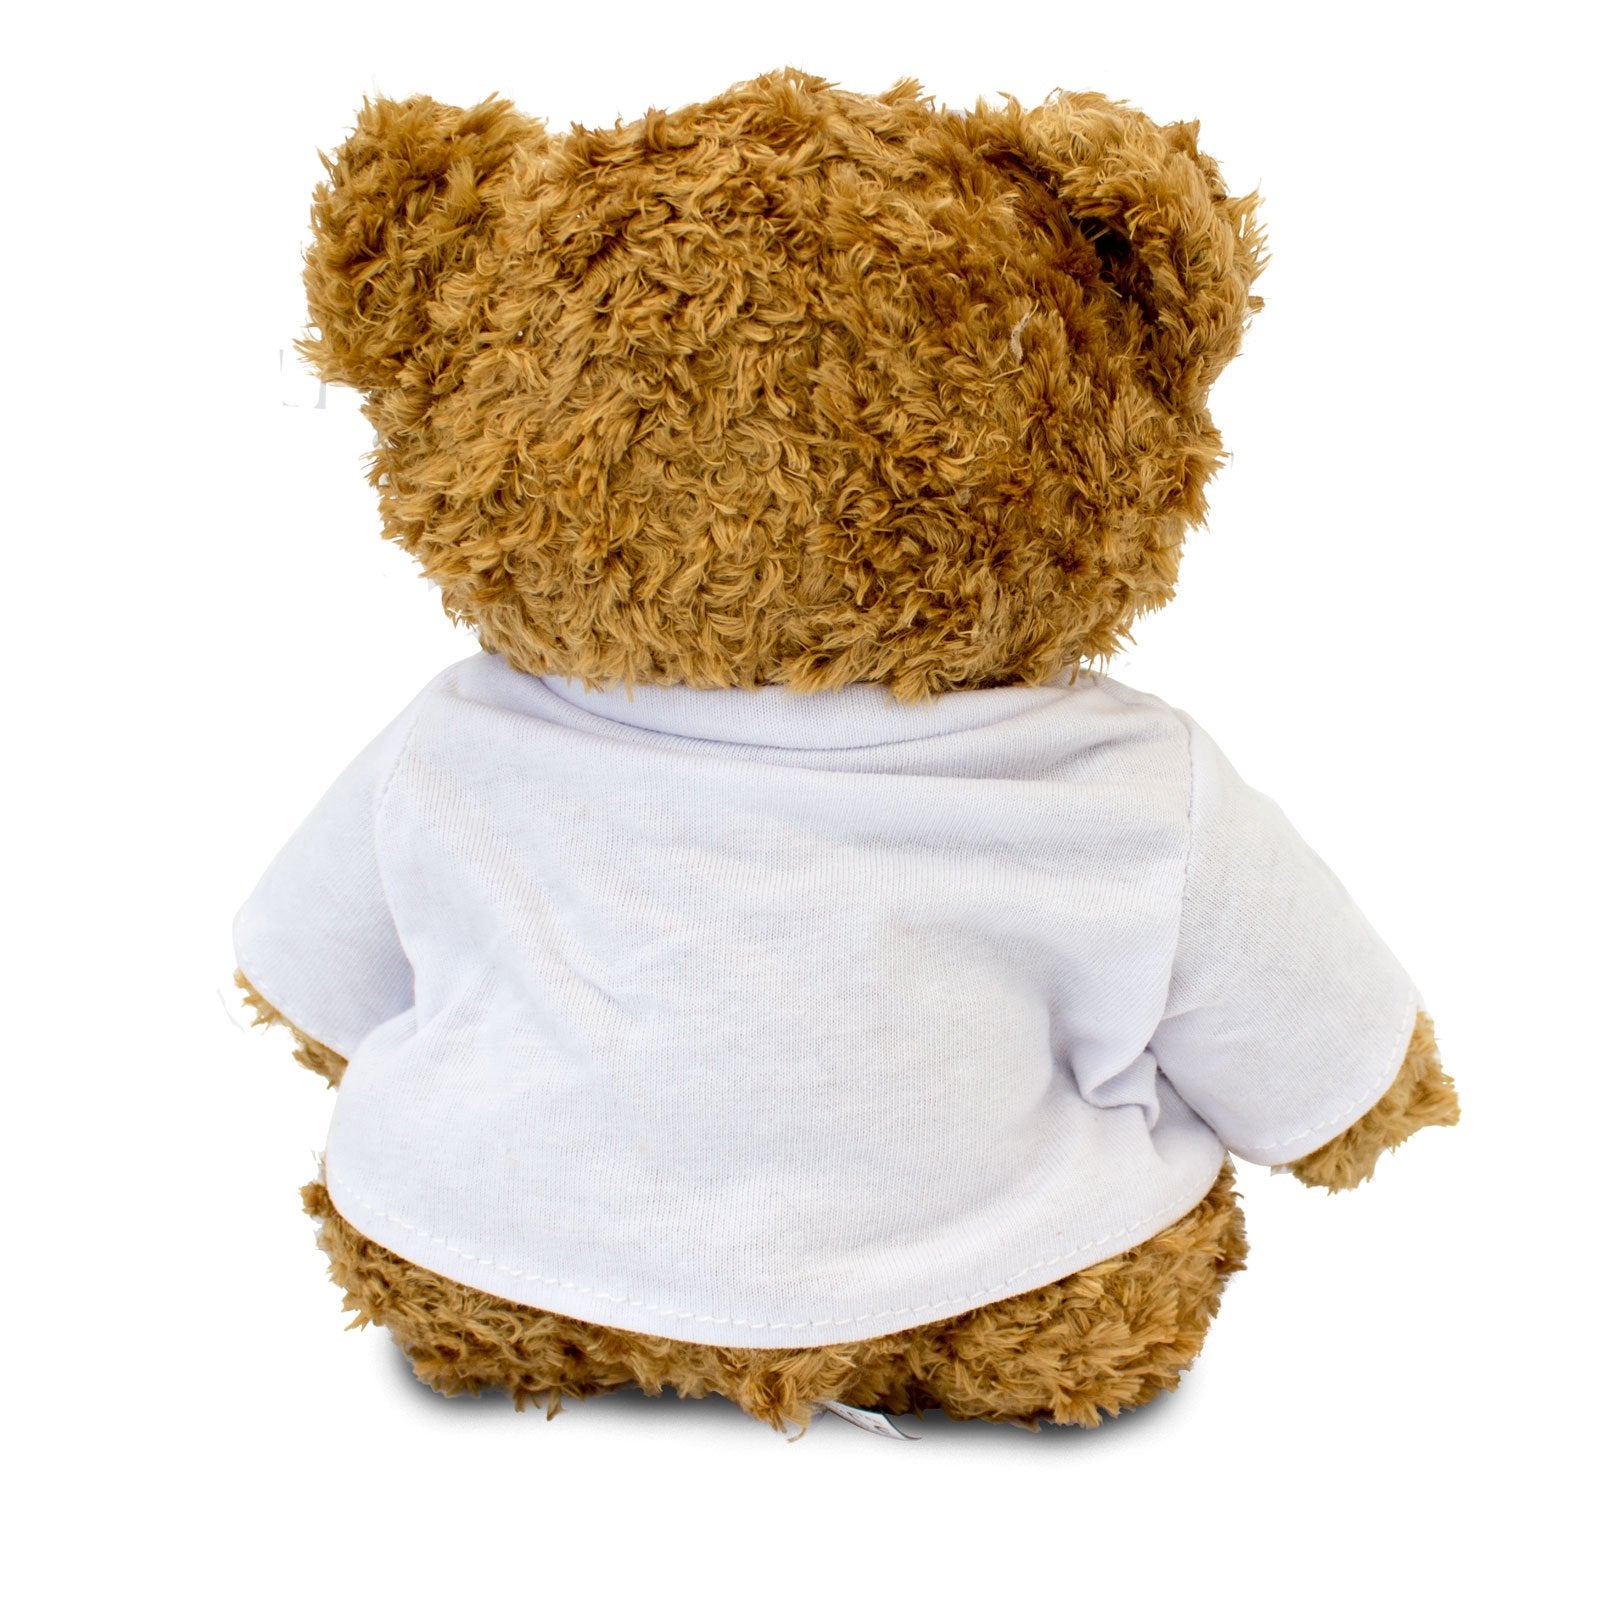 Get Well Soon Charlene - Teddy Bear